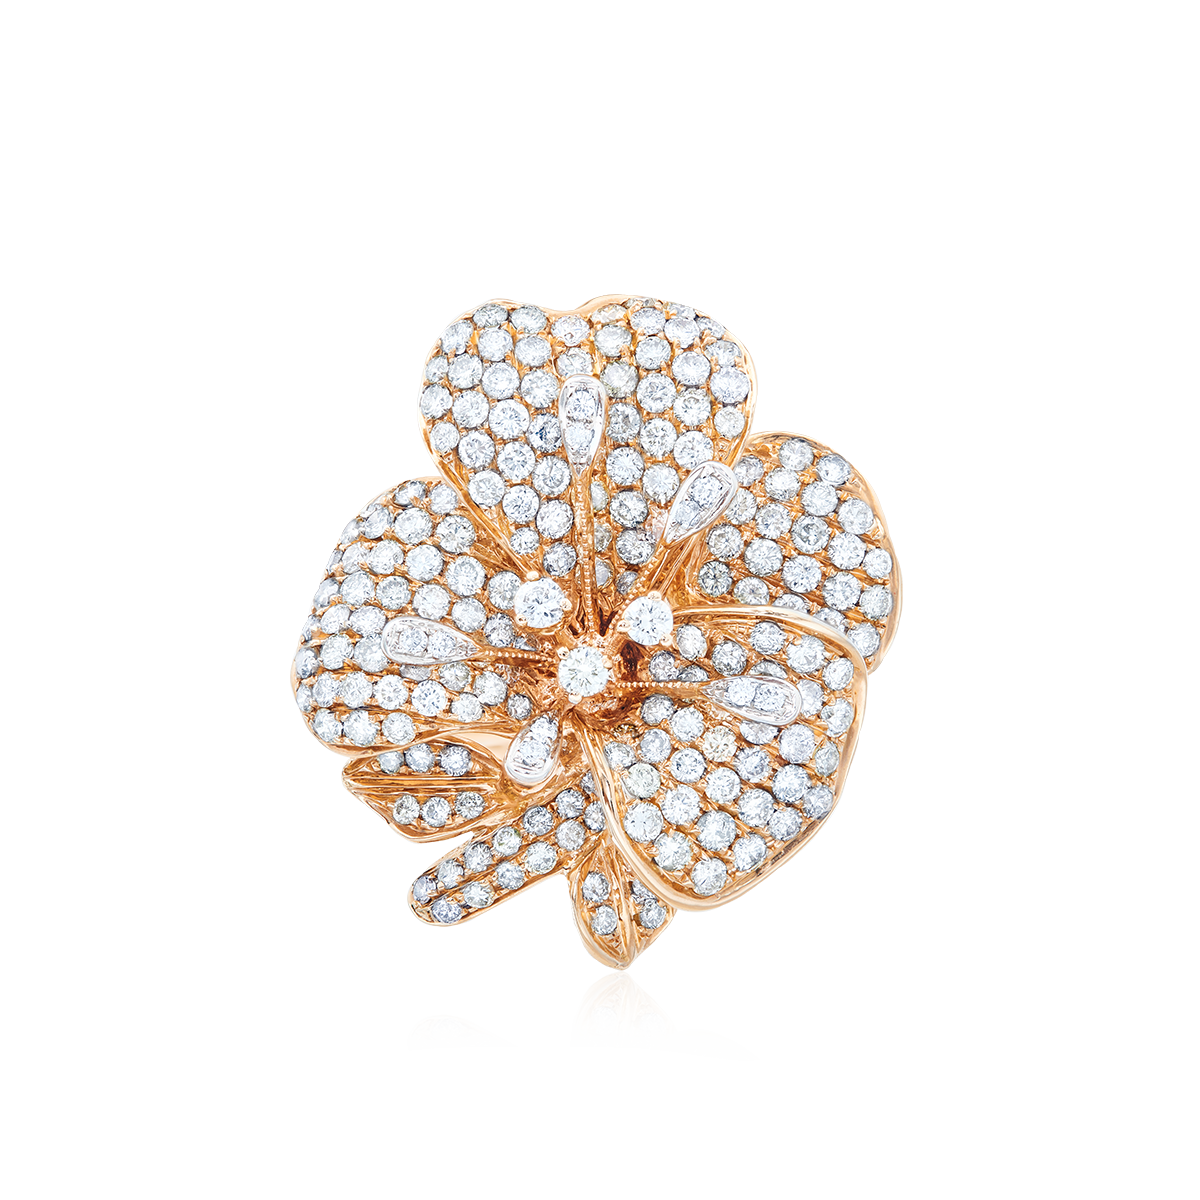 GSA 11.90公克 花朵造型鑽戒
Flower' Diamond Ring